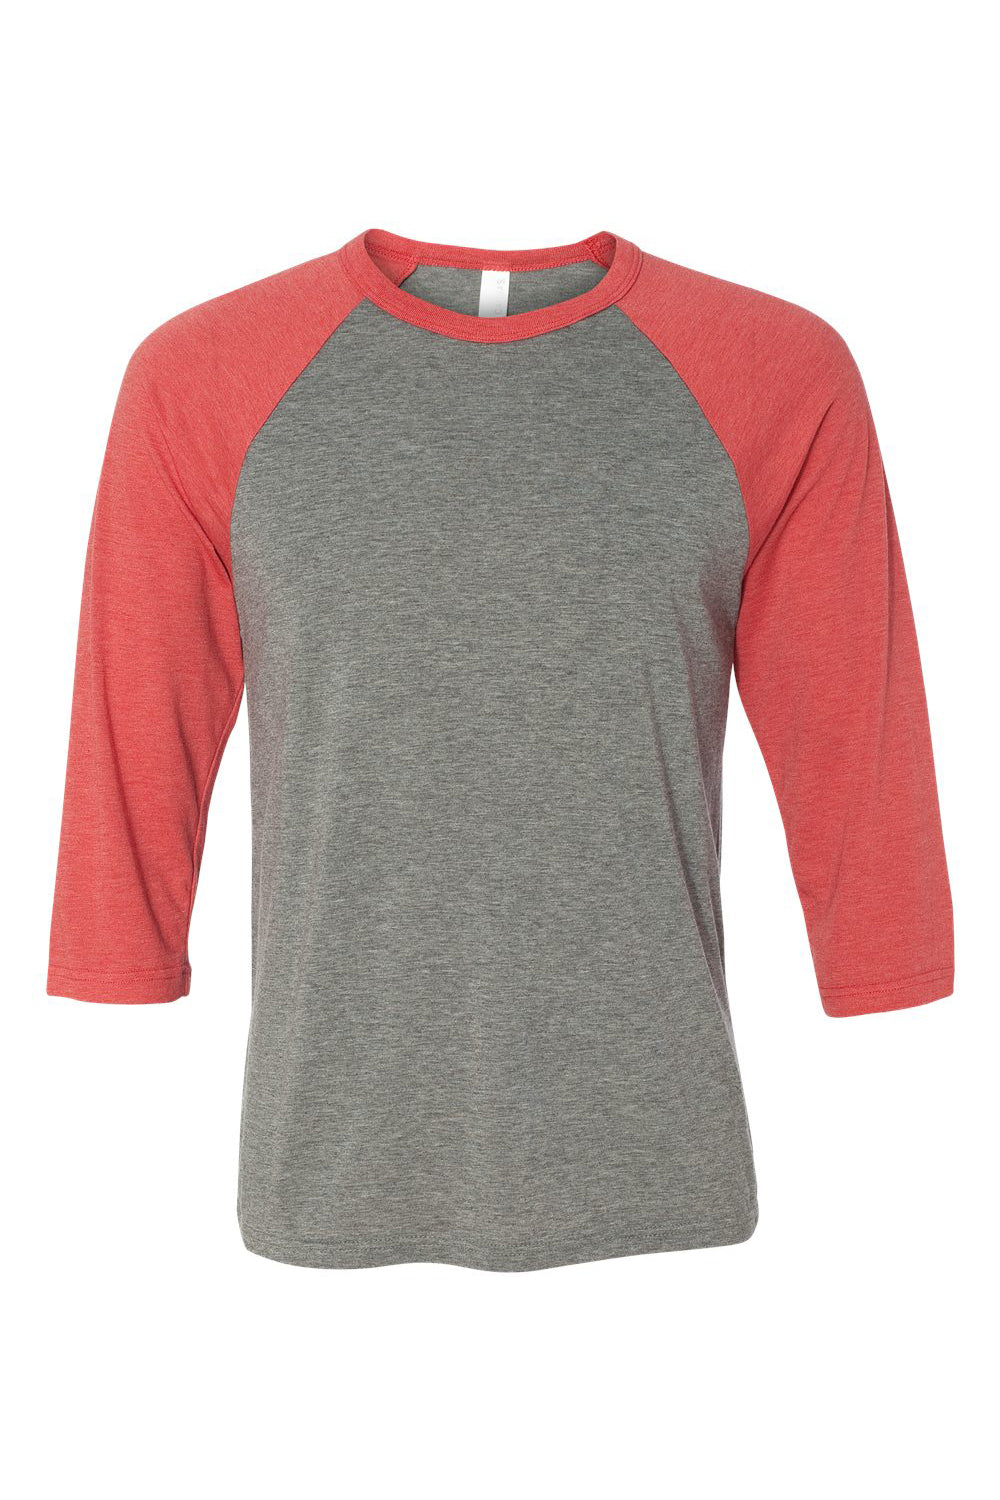 Bella + Canvas BC3200/3200 Mens 3/4 Sleeve Crewneck T-Shirt Grey/Light Red Flat Front